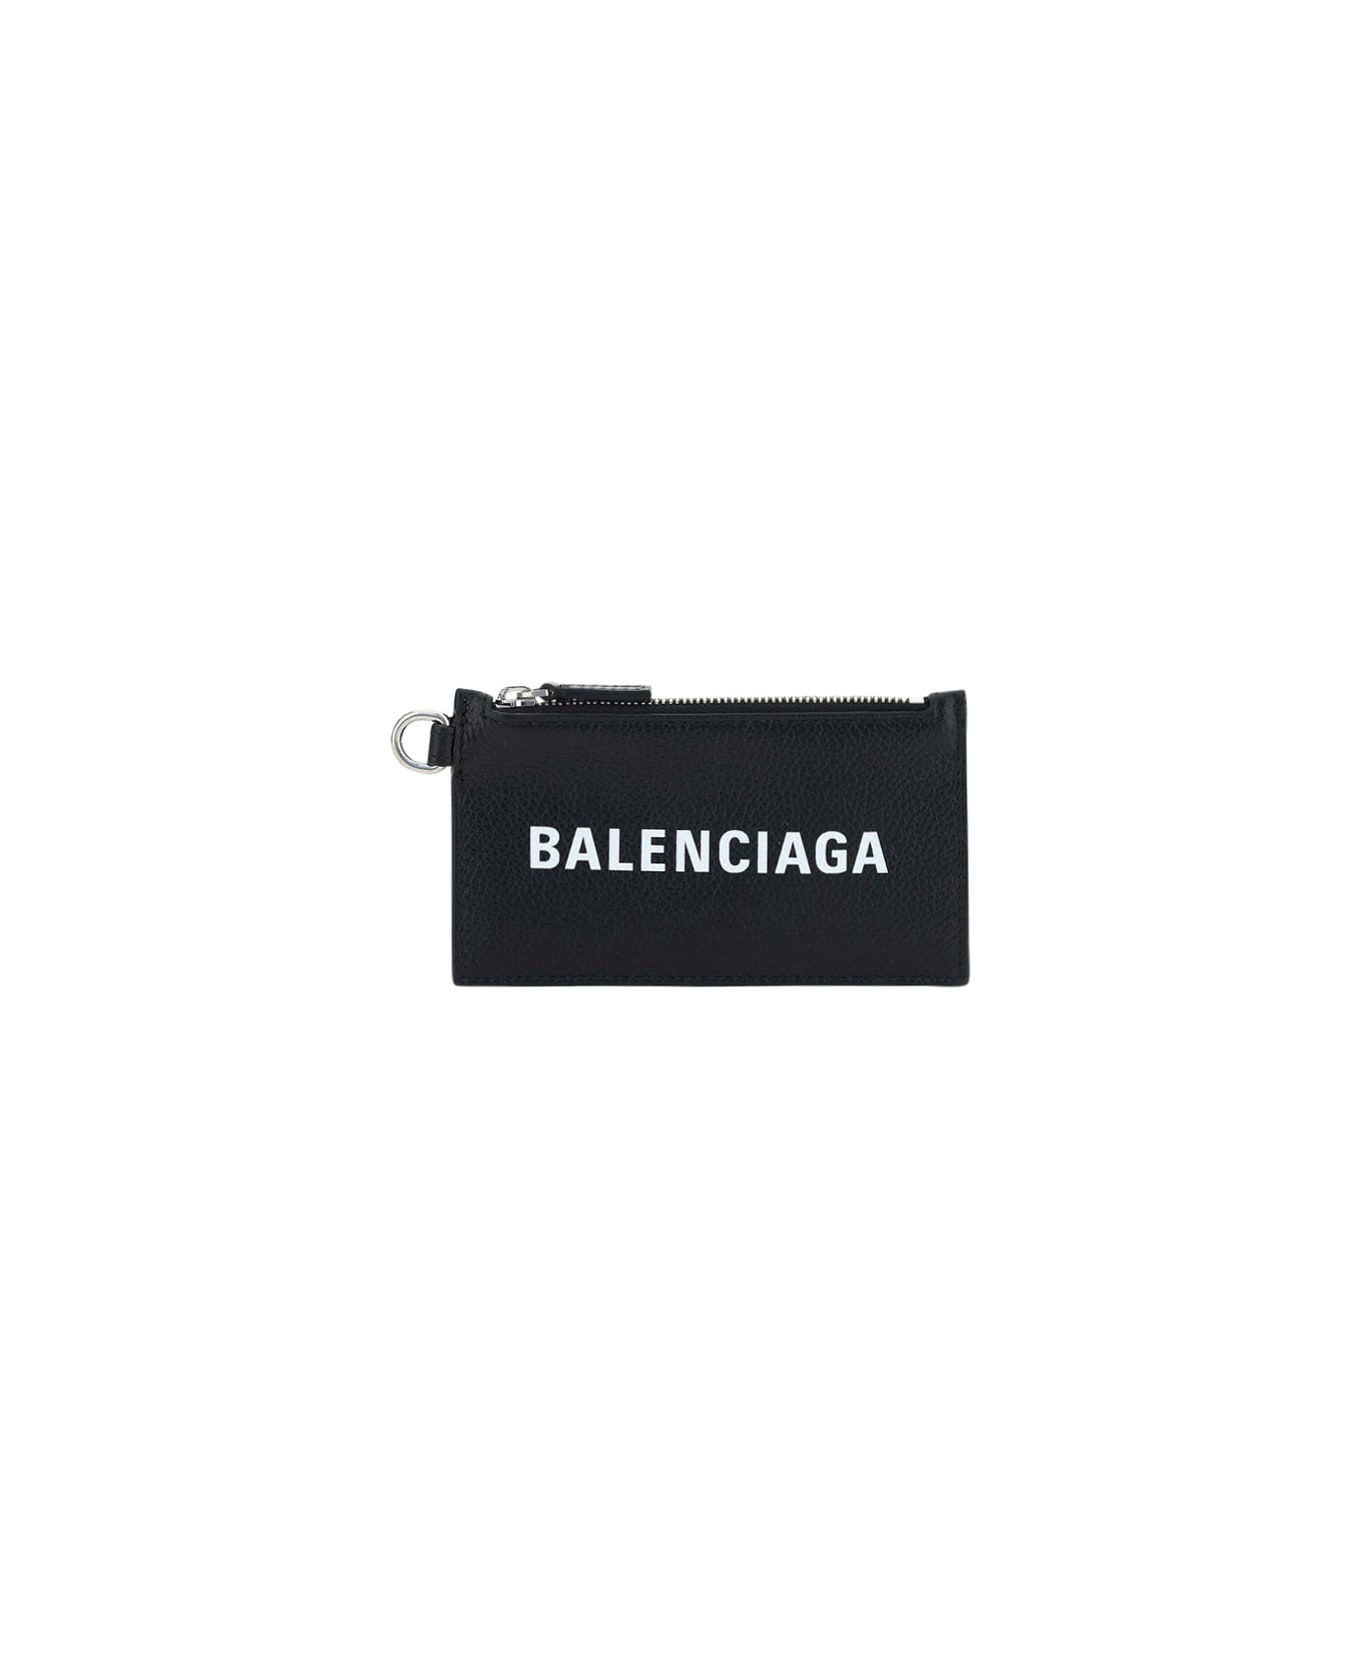 Balenciaga Neckstrap Cash Card Case - Black/l White